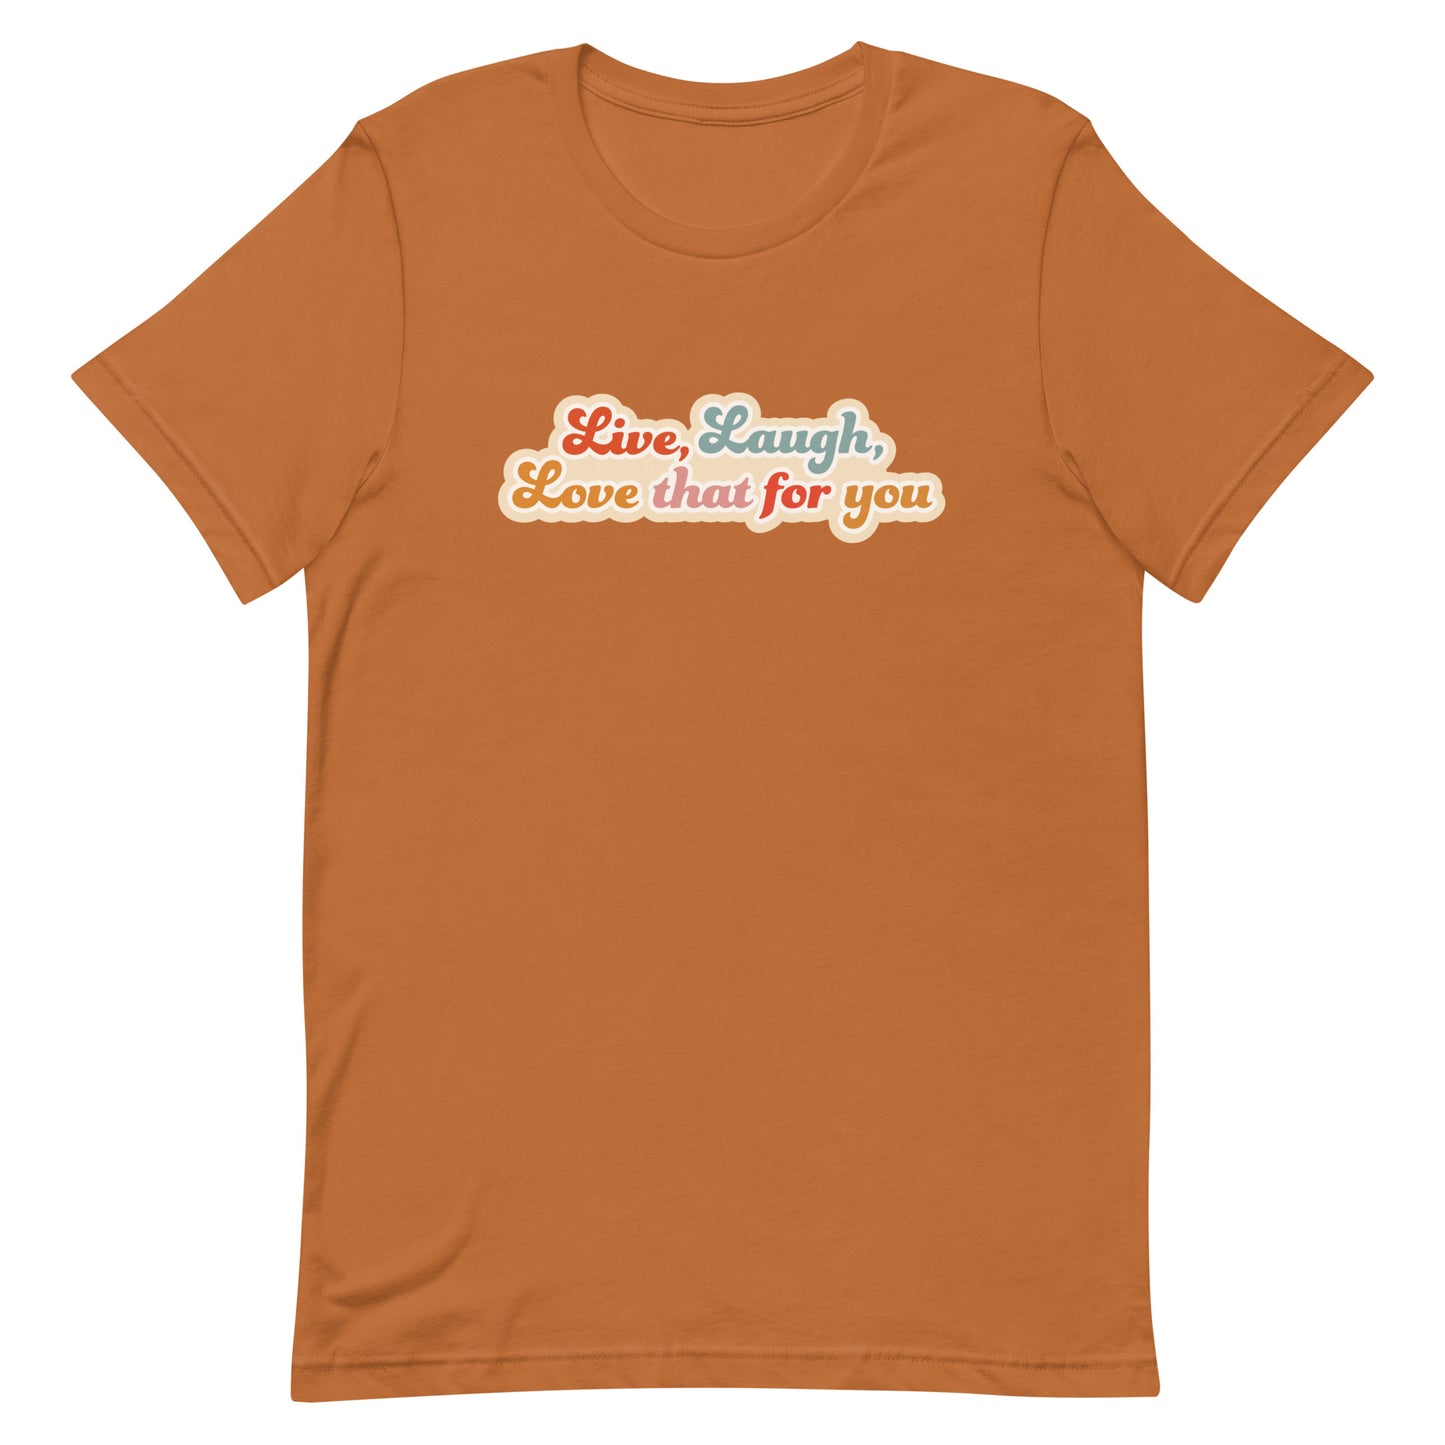 A burnt orange crewneck t-shirt featuring a cursive, colorful font that reads "Live, Laugh, Love that for you".